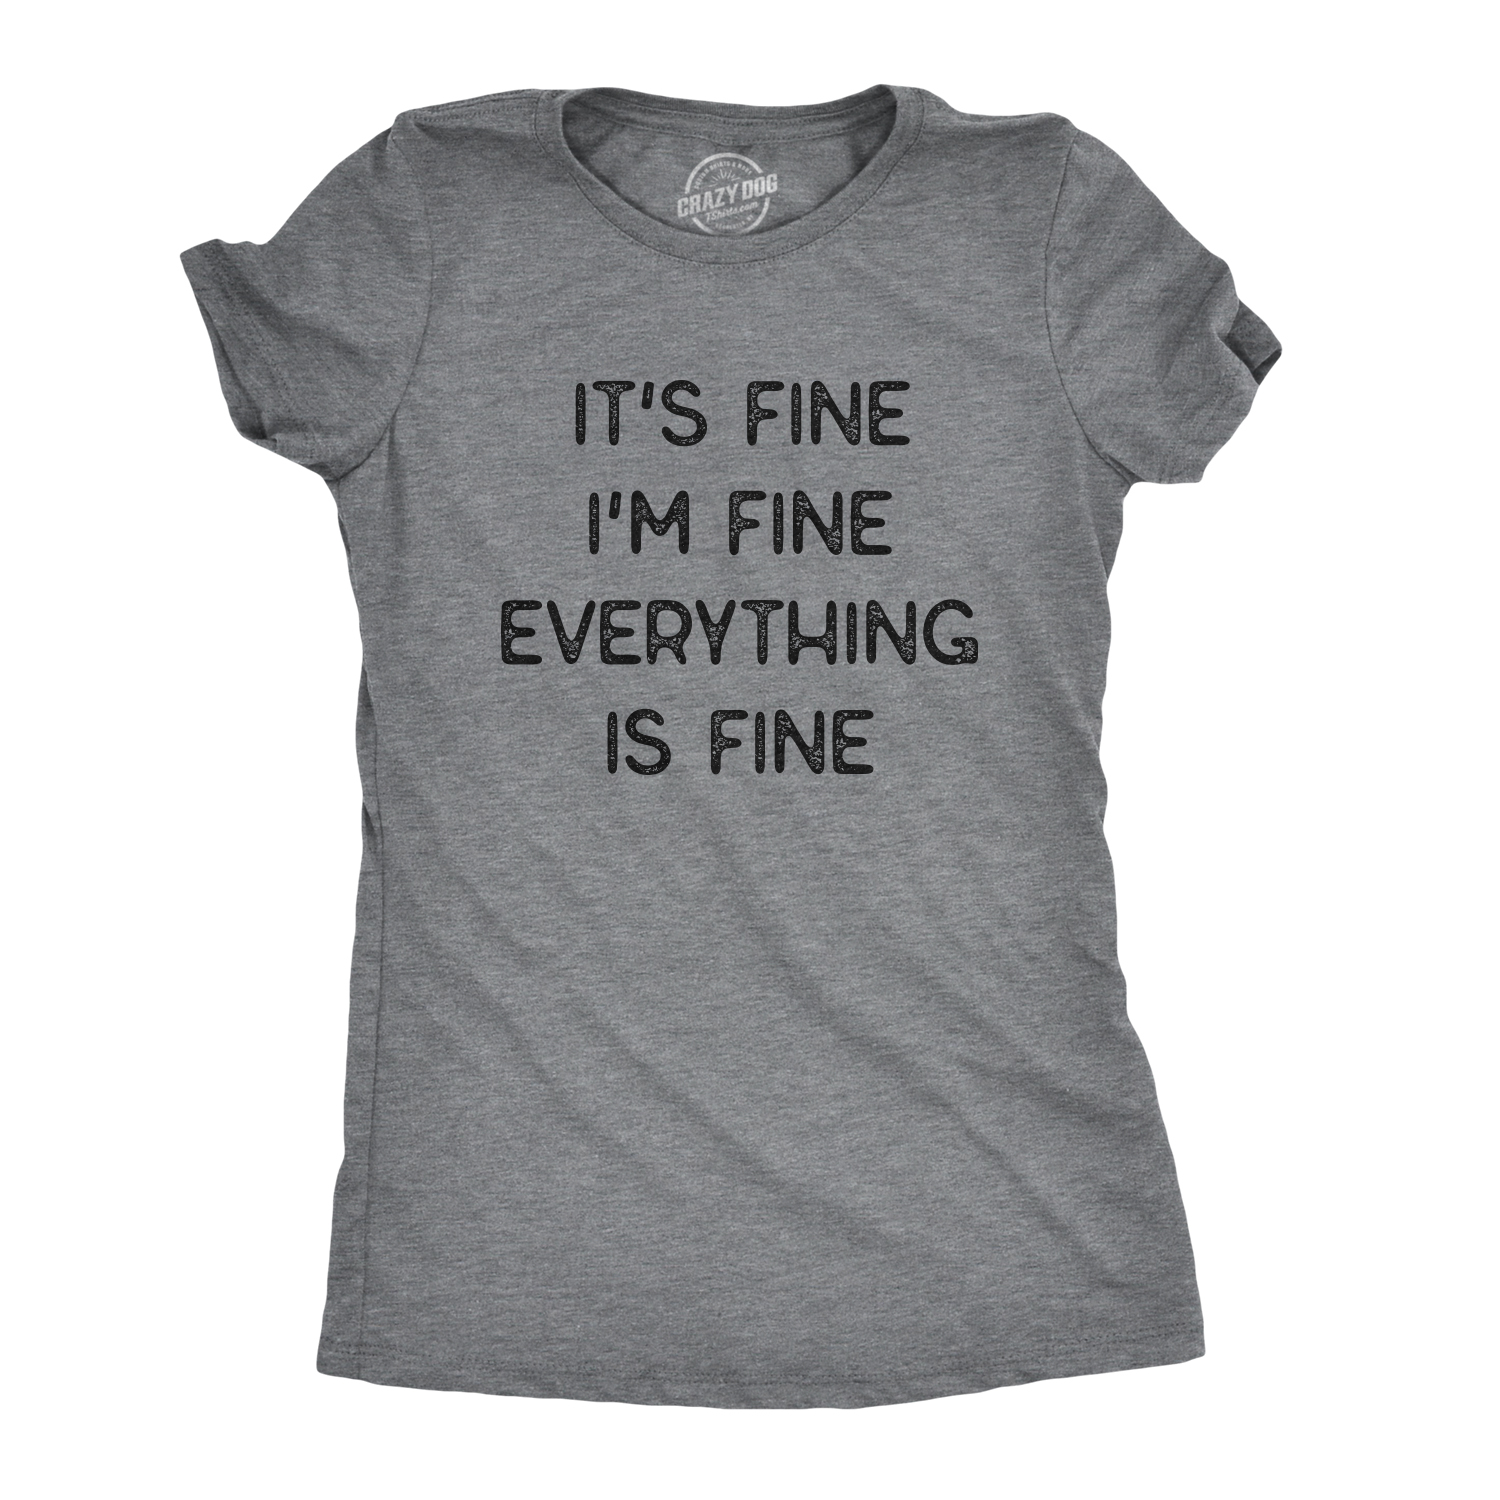 Crazy Dog Tshirts Womens It's Fine I'm Fine Everything Is Fine Tshirt Funny Sarcastic Tee